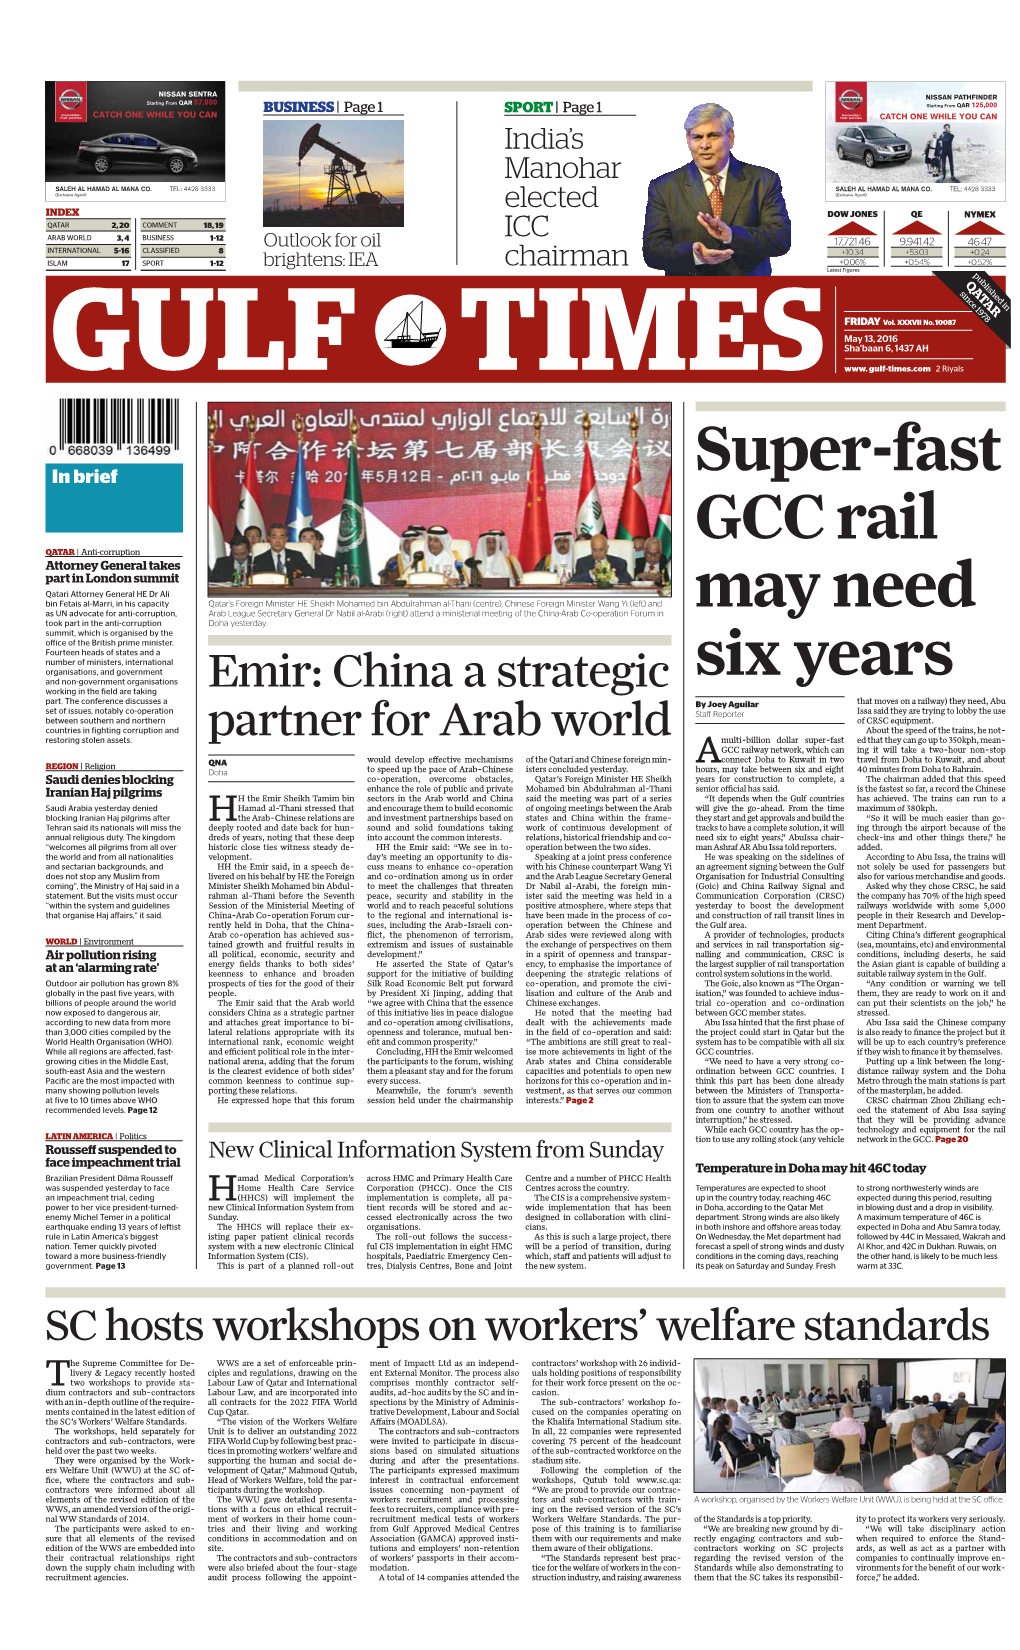 Super-Fast GCC Rail May Need Six Years